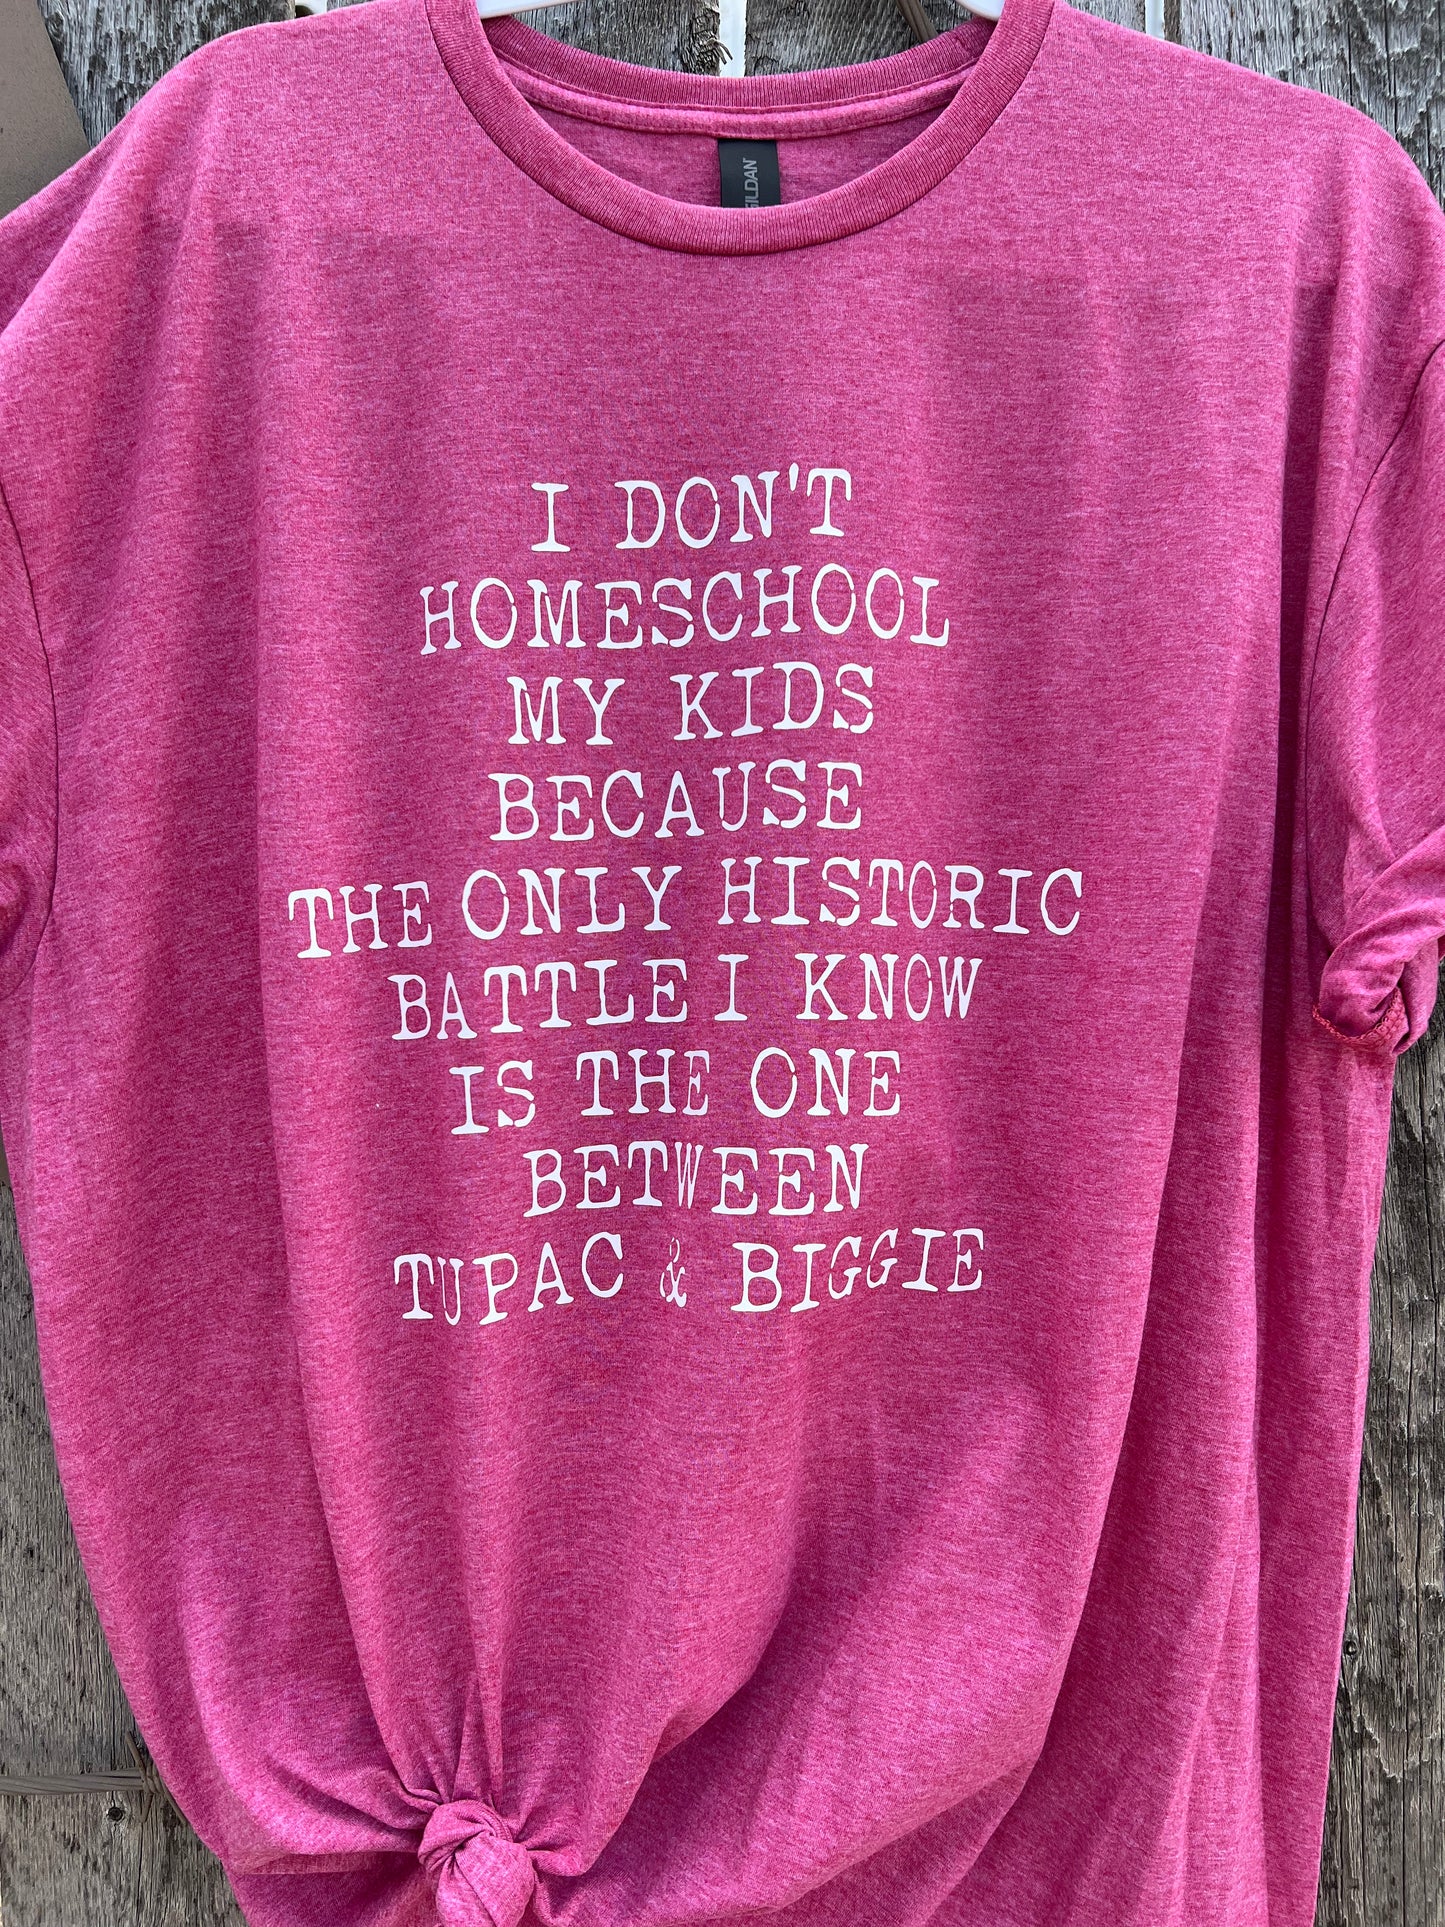 I Don’t Homeschool My Kids Because…Shirt